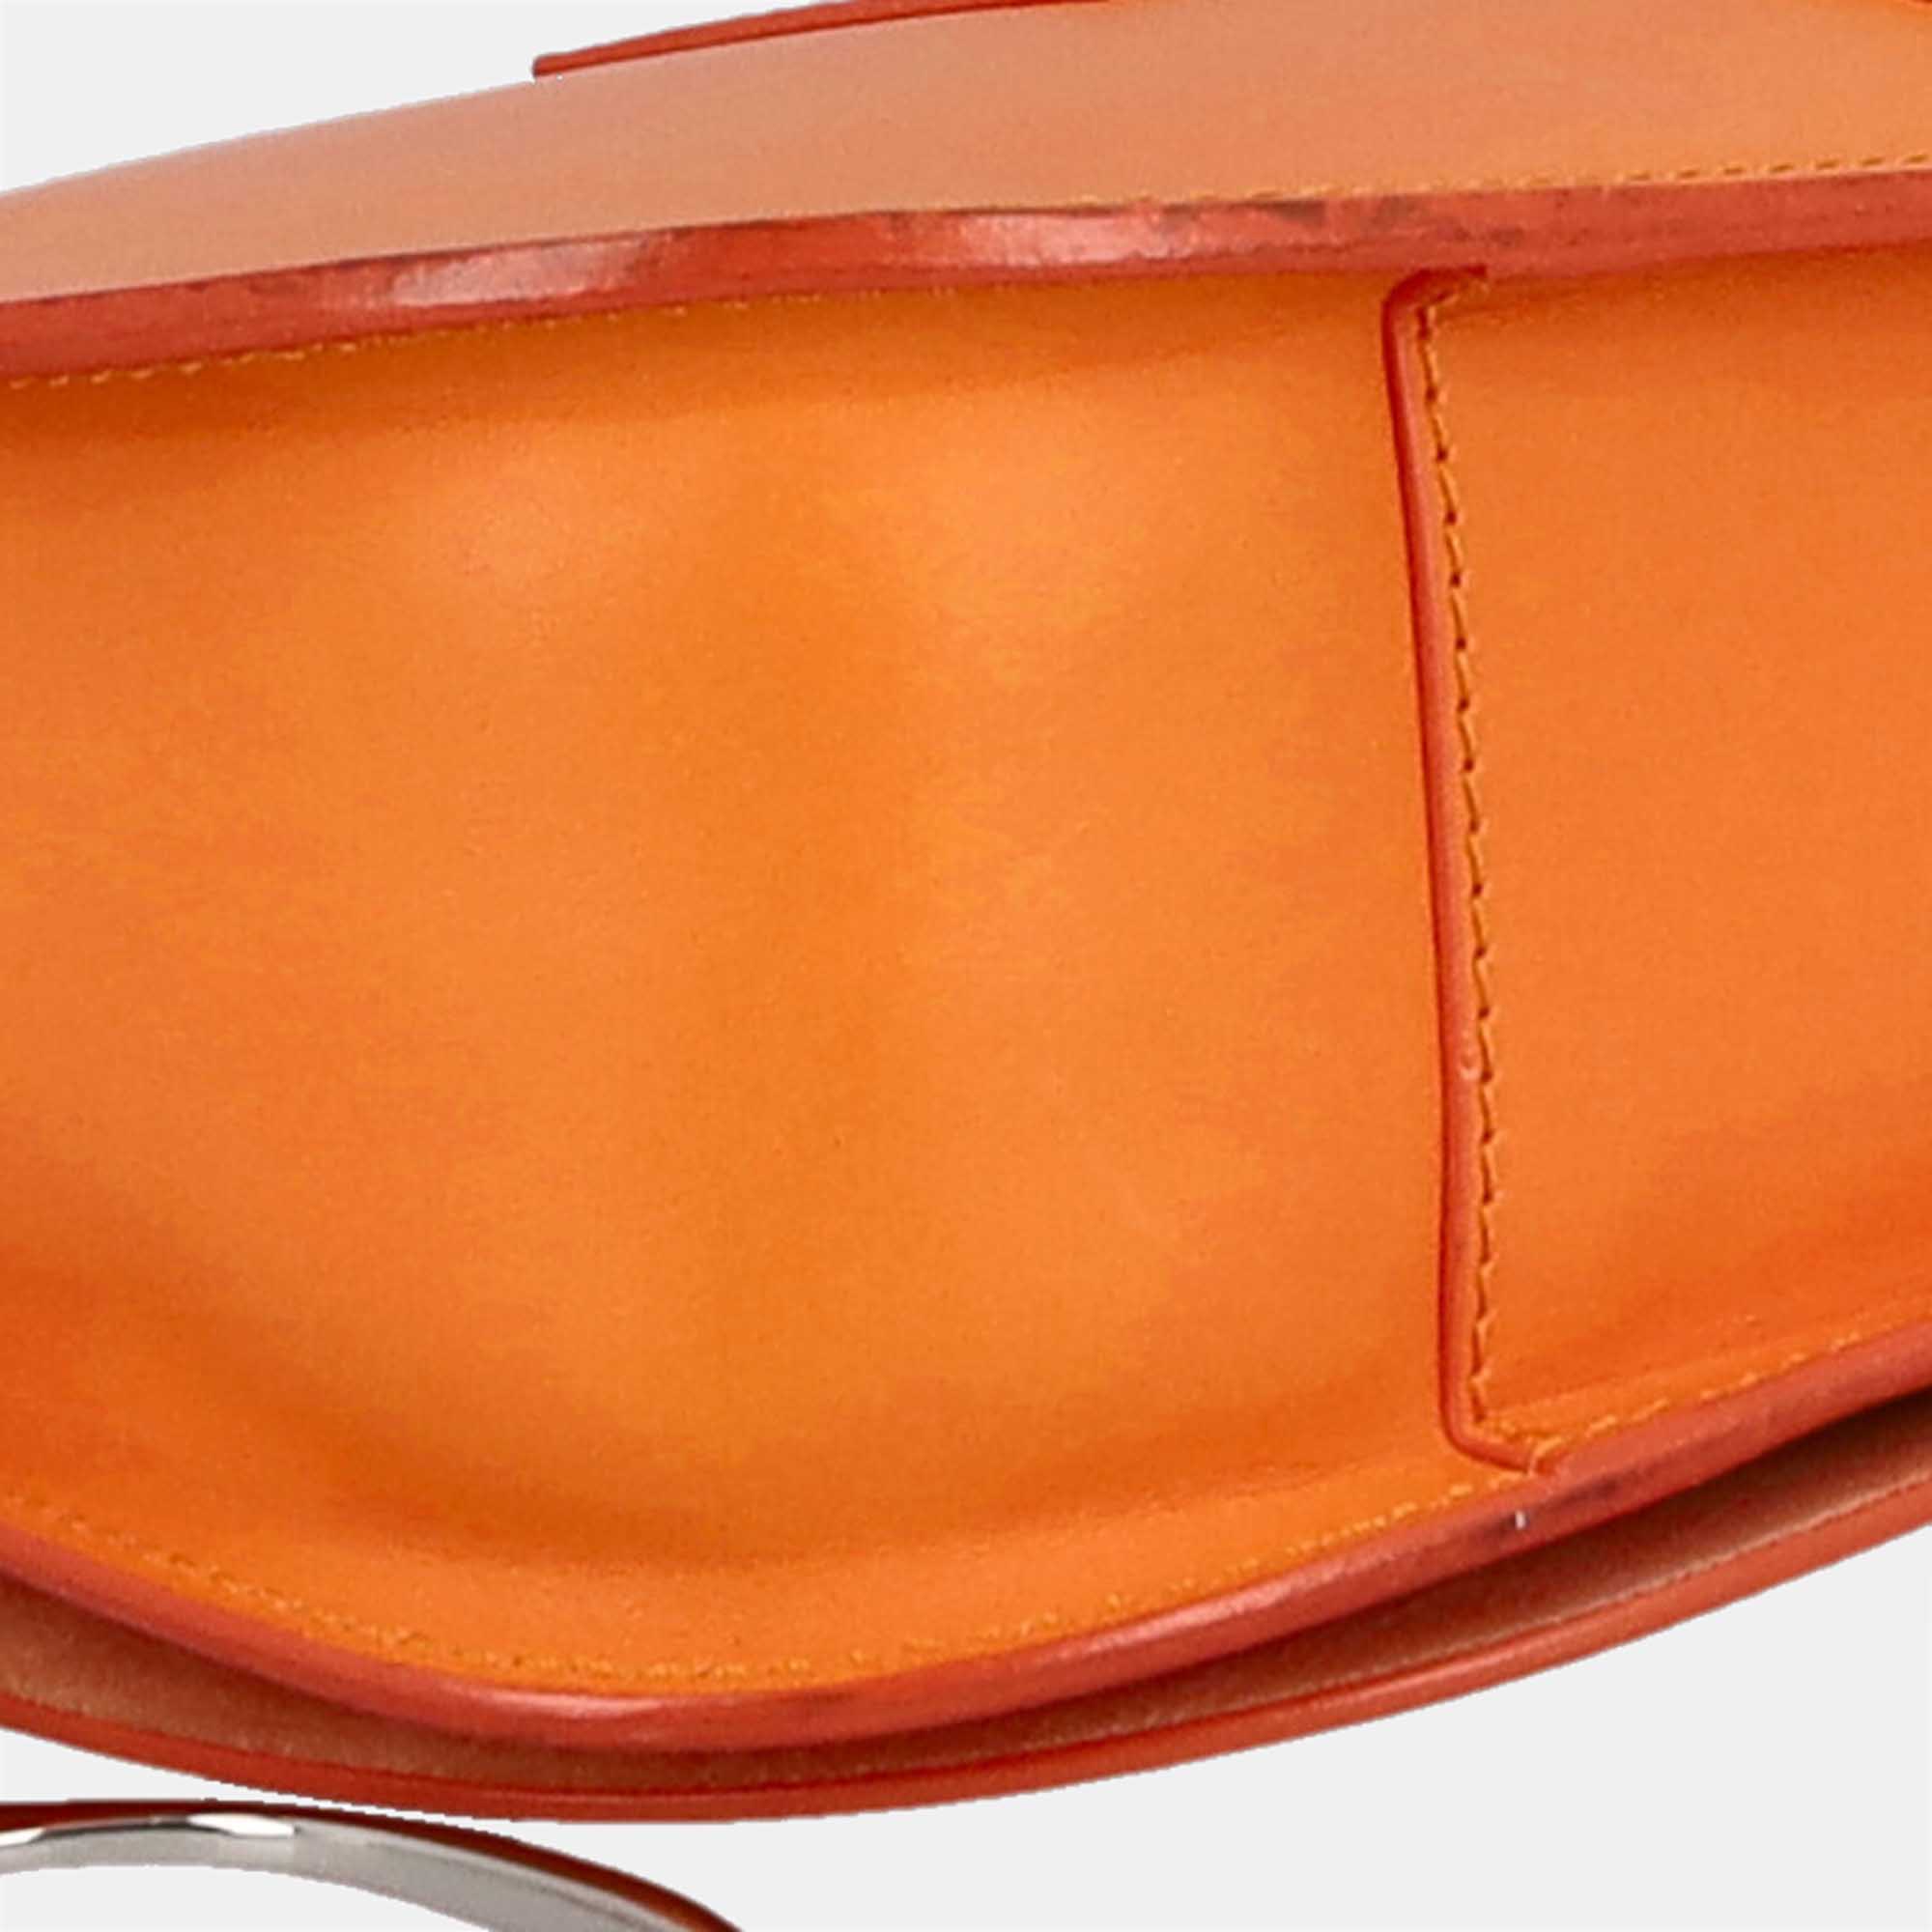 Ralph Lauren  Women's Leather Cross Body Bag - Orange - One Size